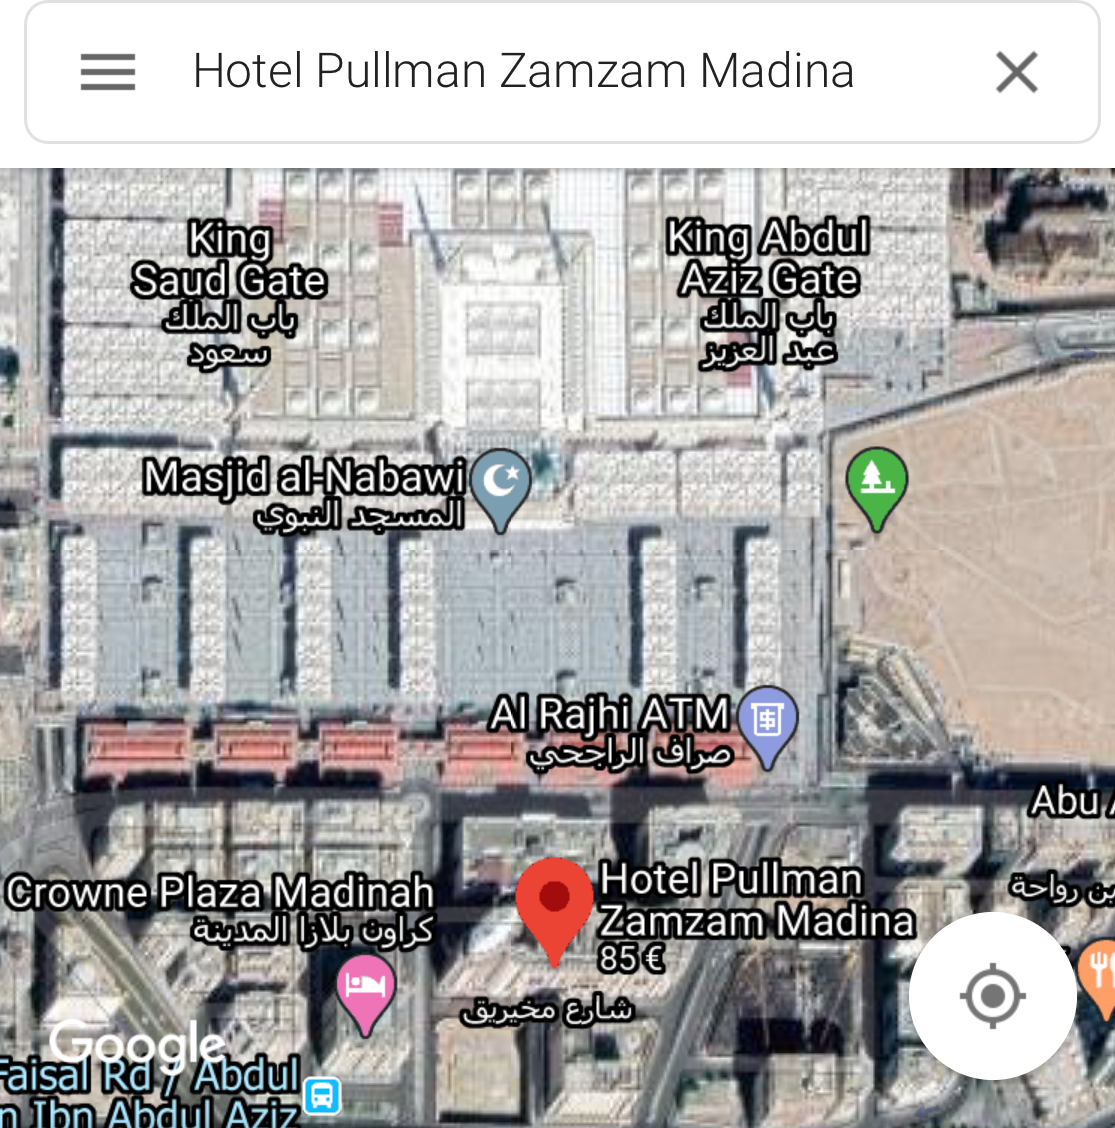 Hôtel Pullman Zamzam Madina